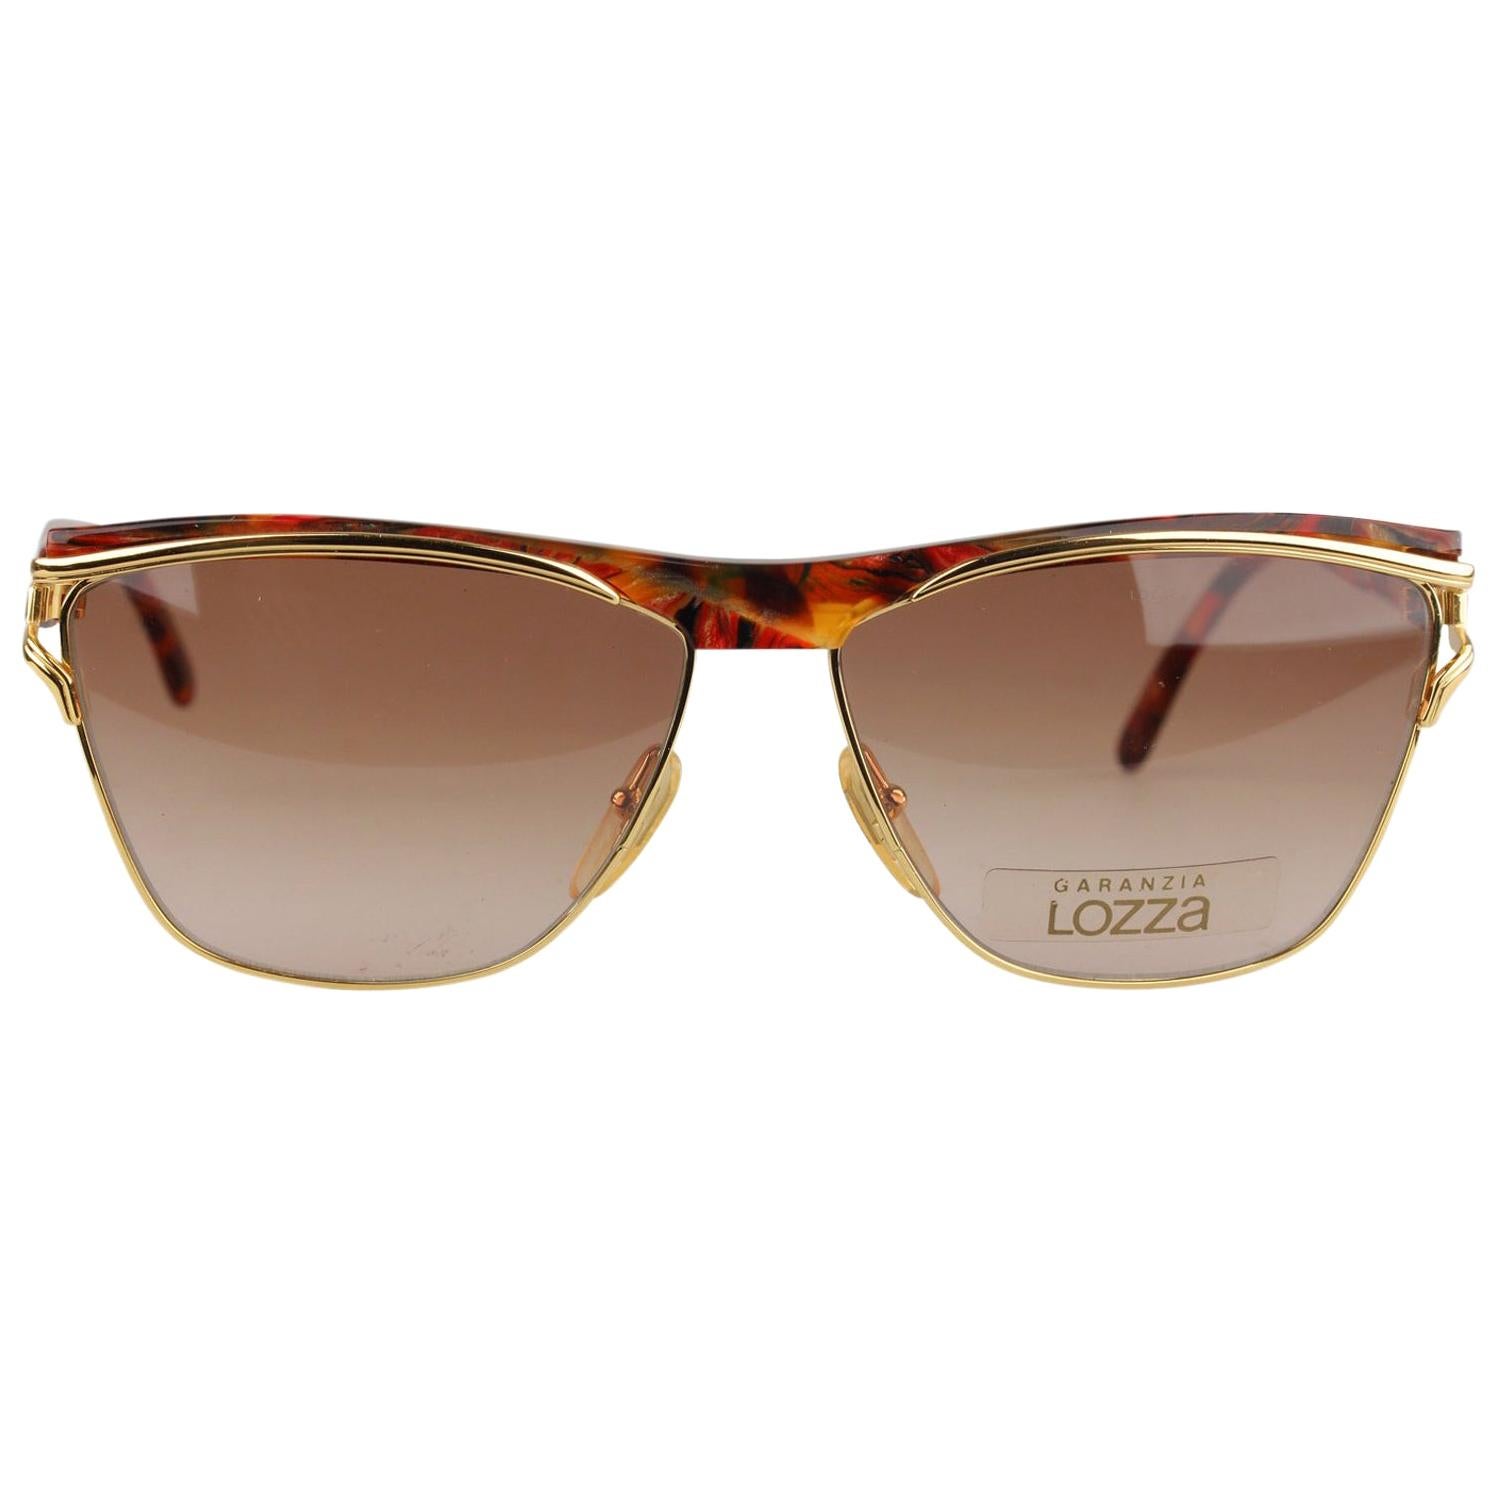 Lozza VIntage Unisex Brown and Gold Sunglasses Mod. Letizia 135mm Wide